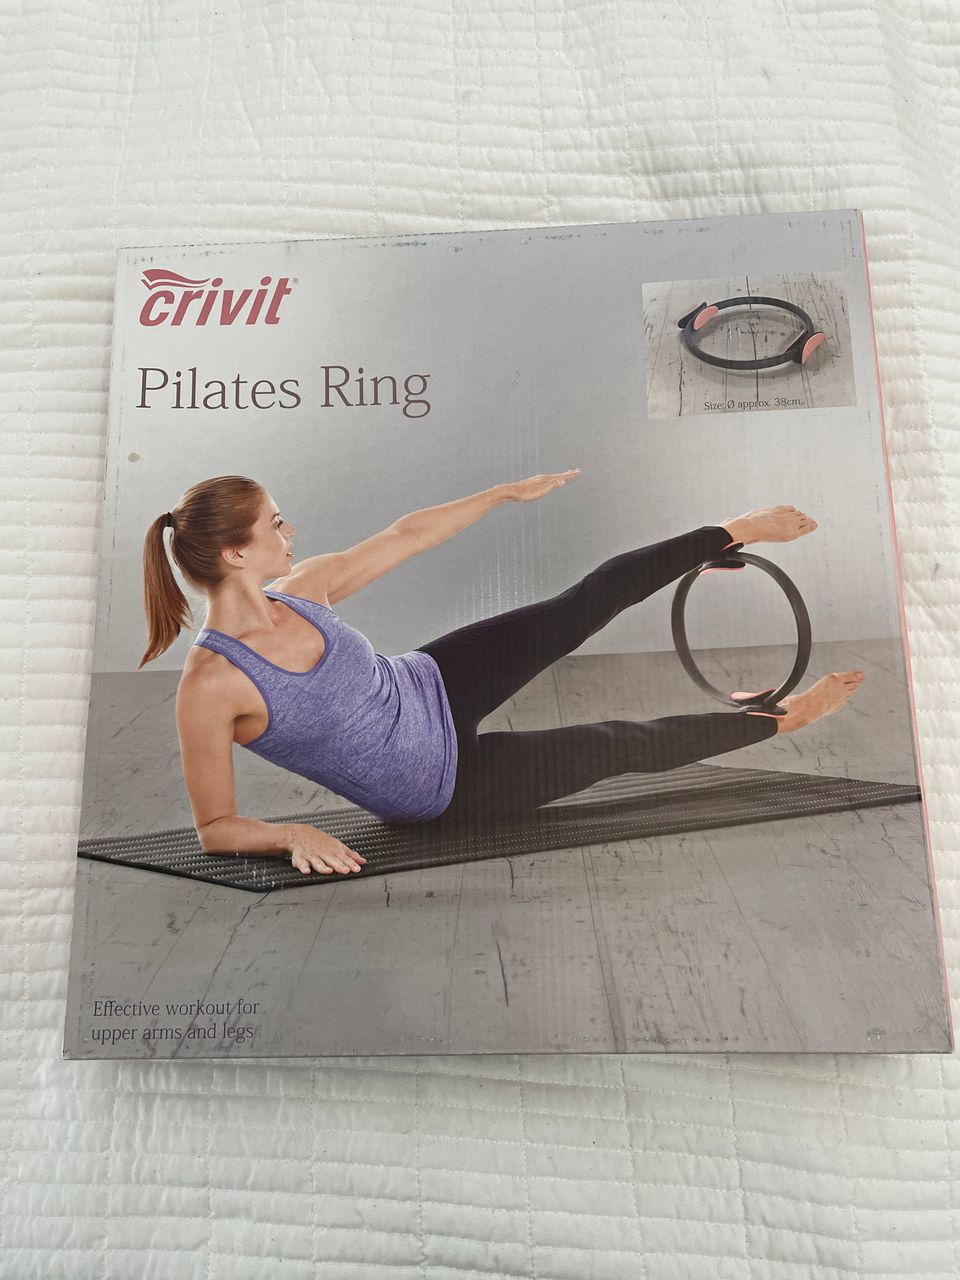 Uusi pilates rengas / pilates ring